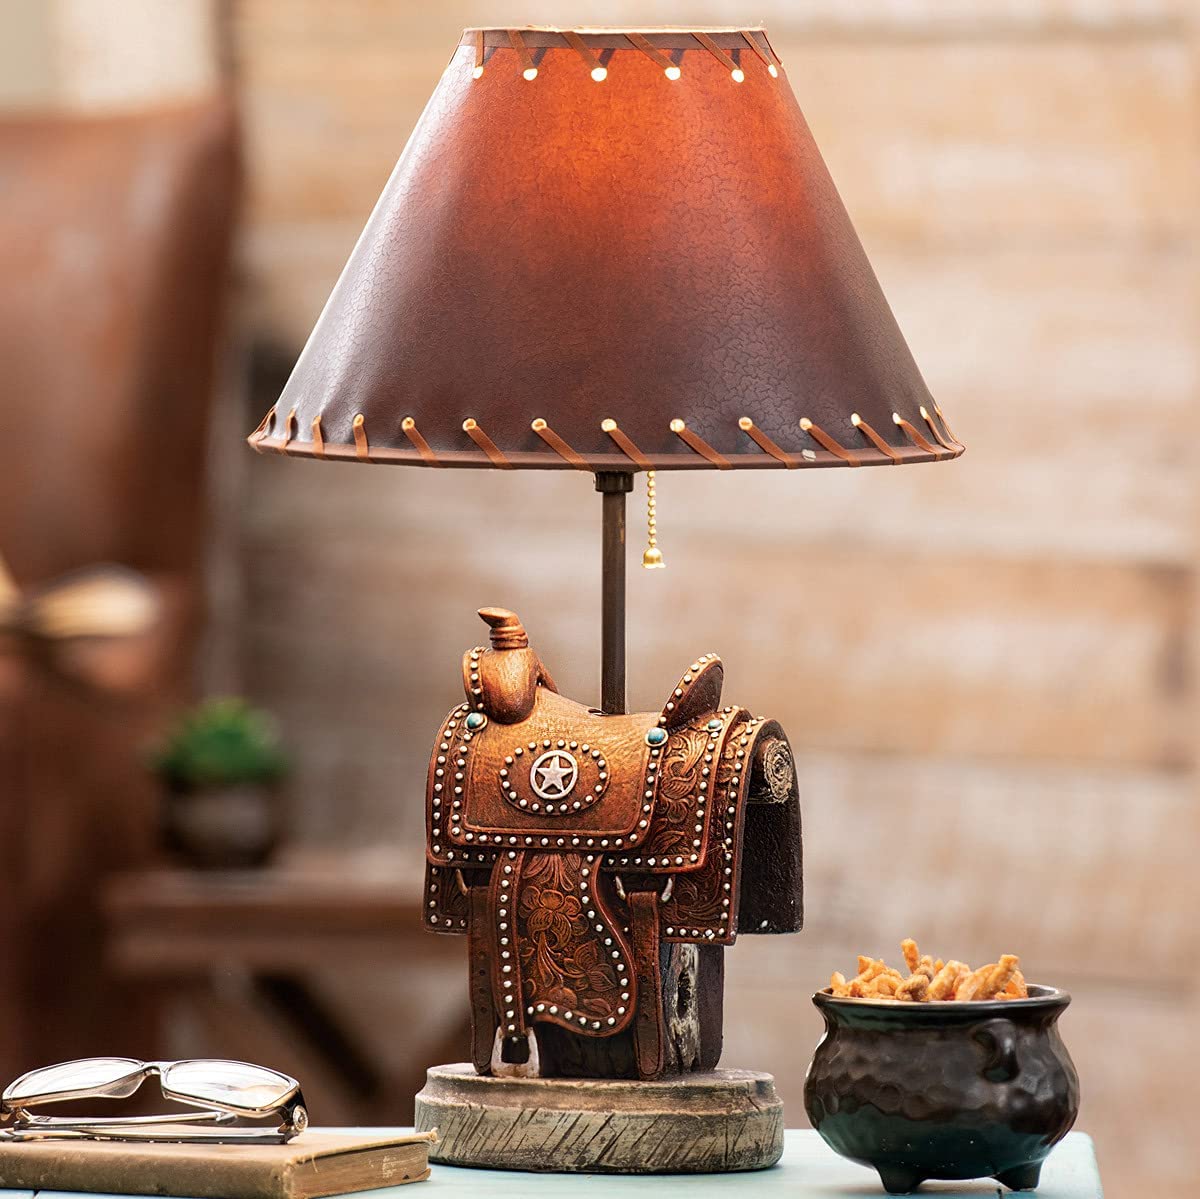 Saddle table lamp